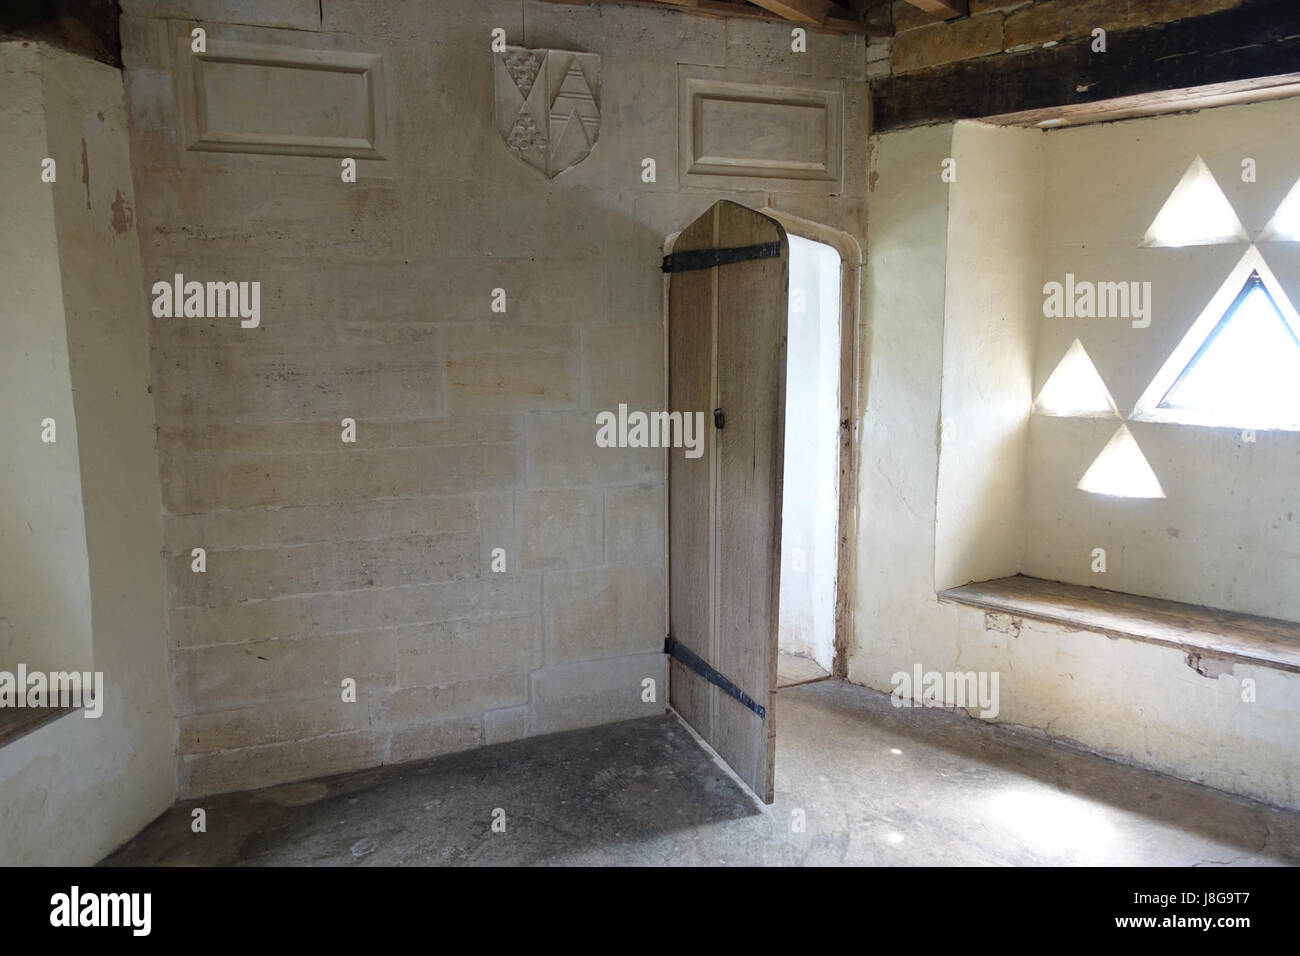 Main room   Rushton Triangular Lodge   Northamptonshire, England   DSC09407 Stock Photo